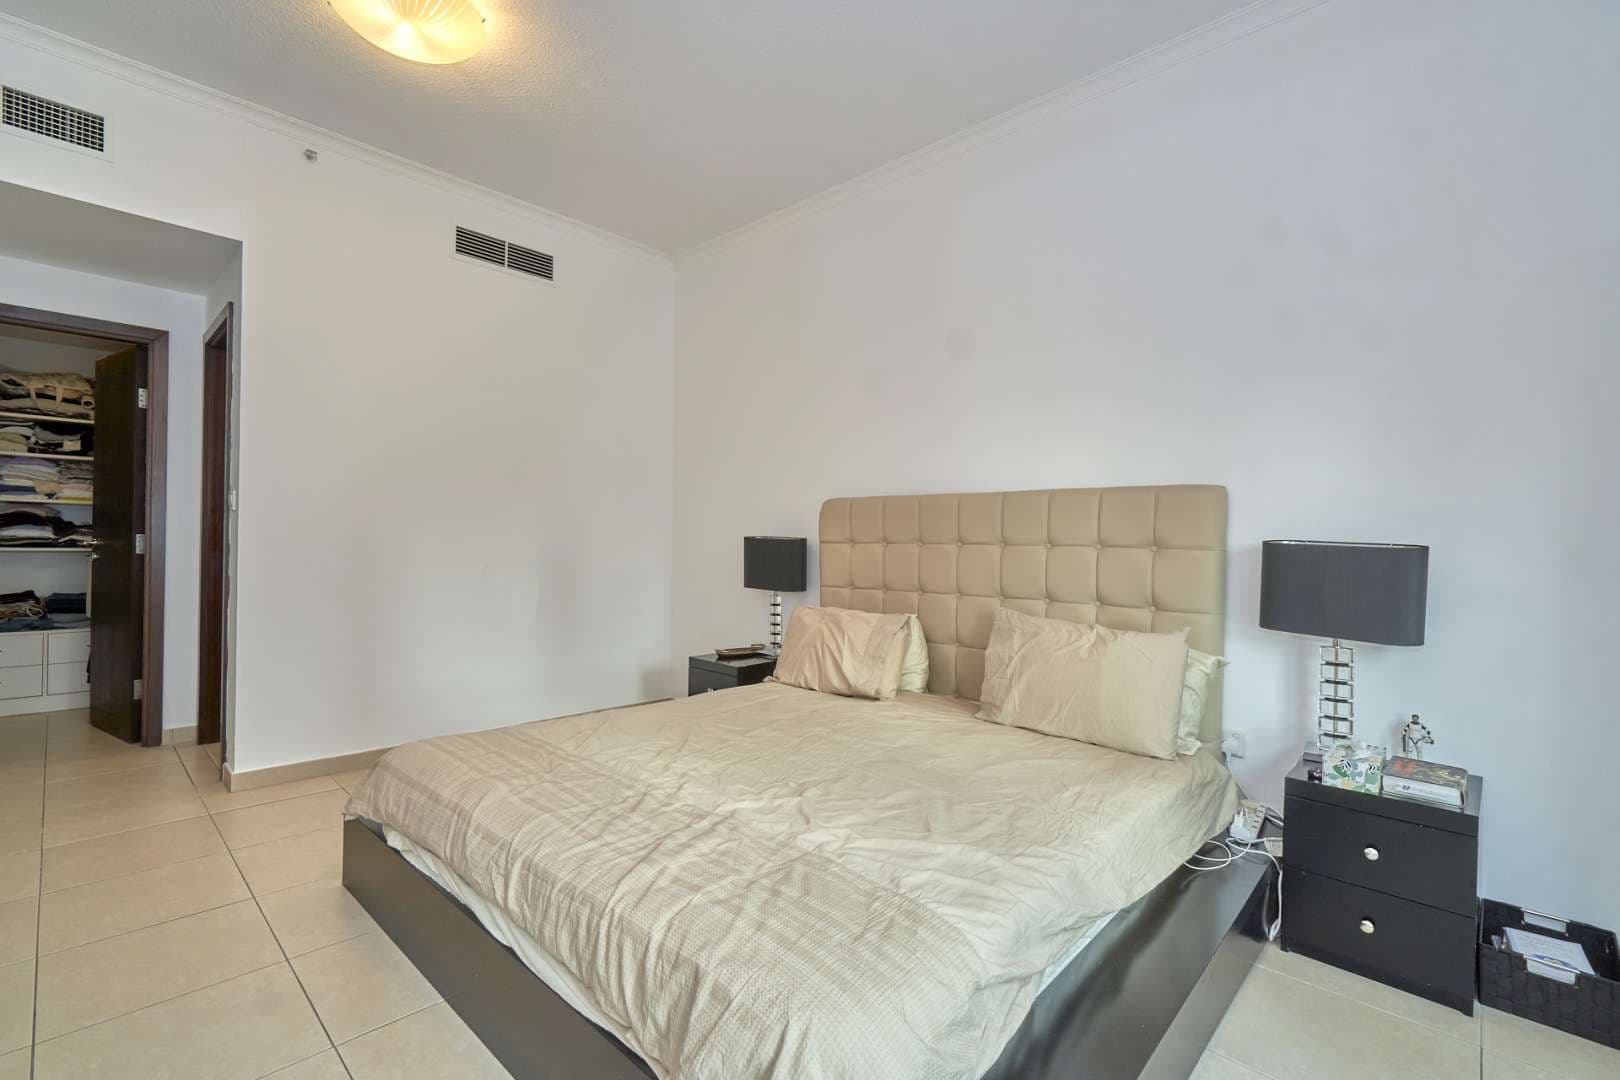  Bedroom Apartment For Rent The Residences Lp08425 1f0d9eb5fb6da400.jpg